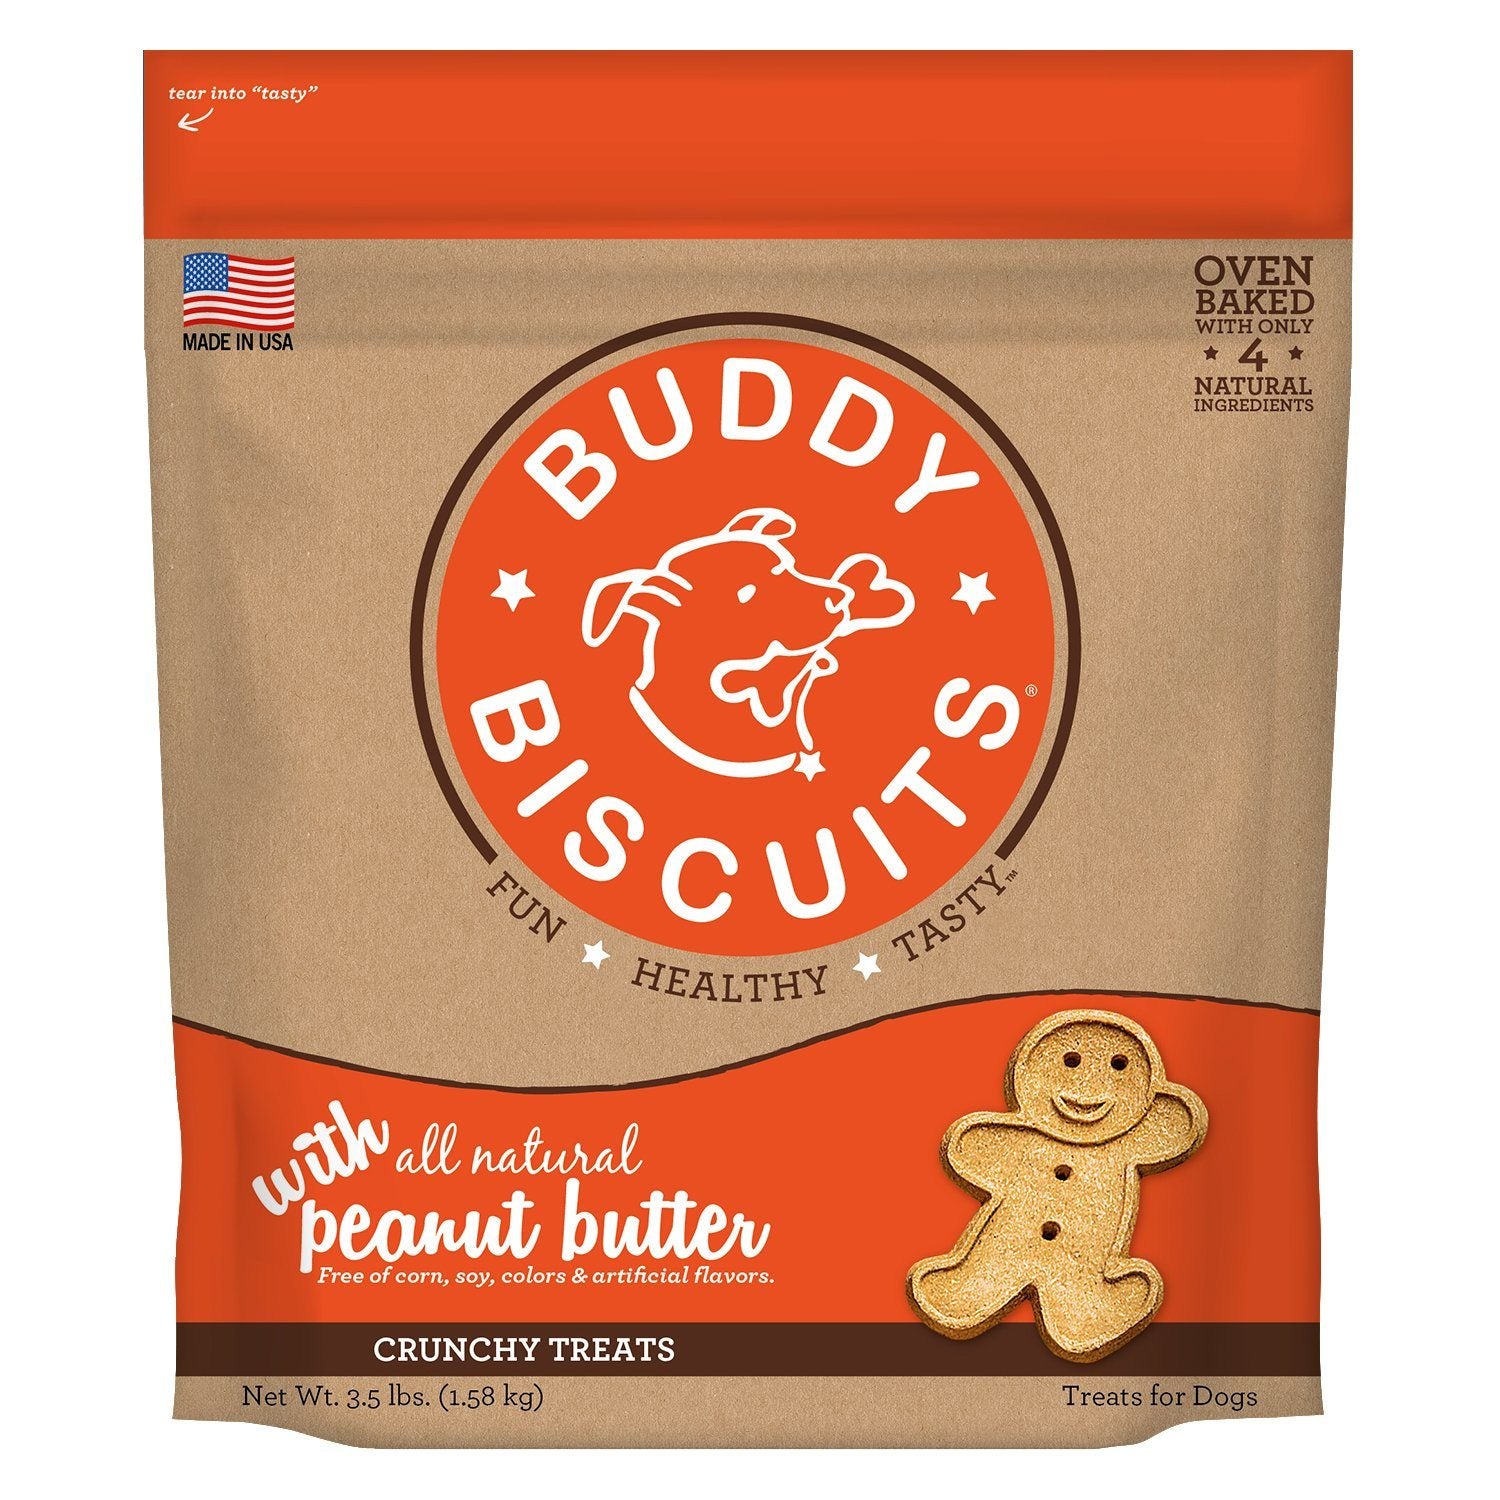 Buddy Biscuits Peanut Butter Original Baked Dog Treats - 3.5 lb Bag  